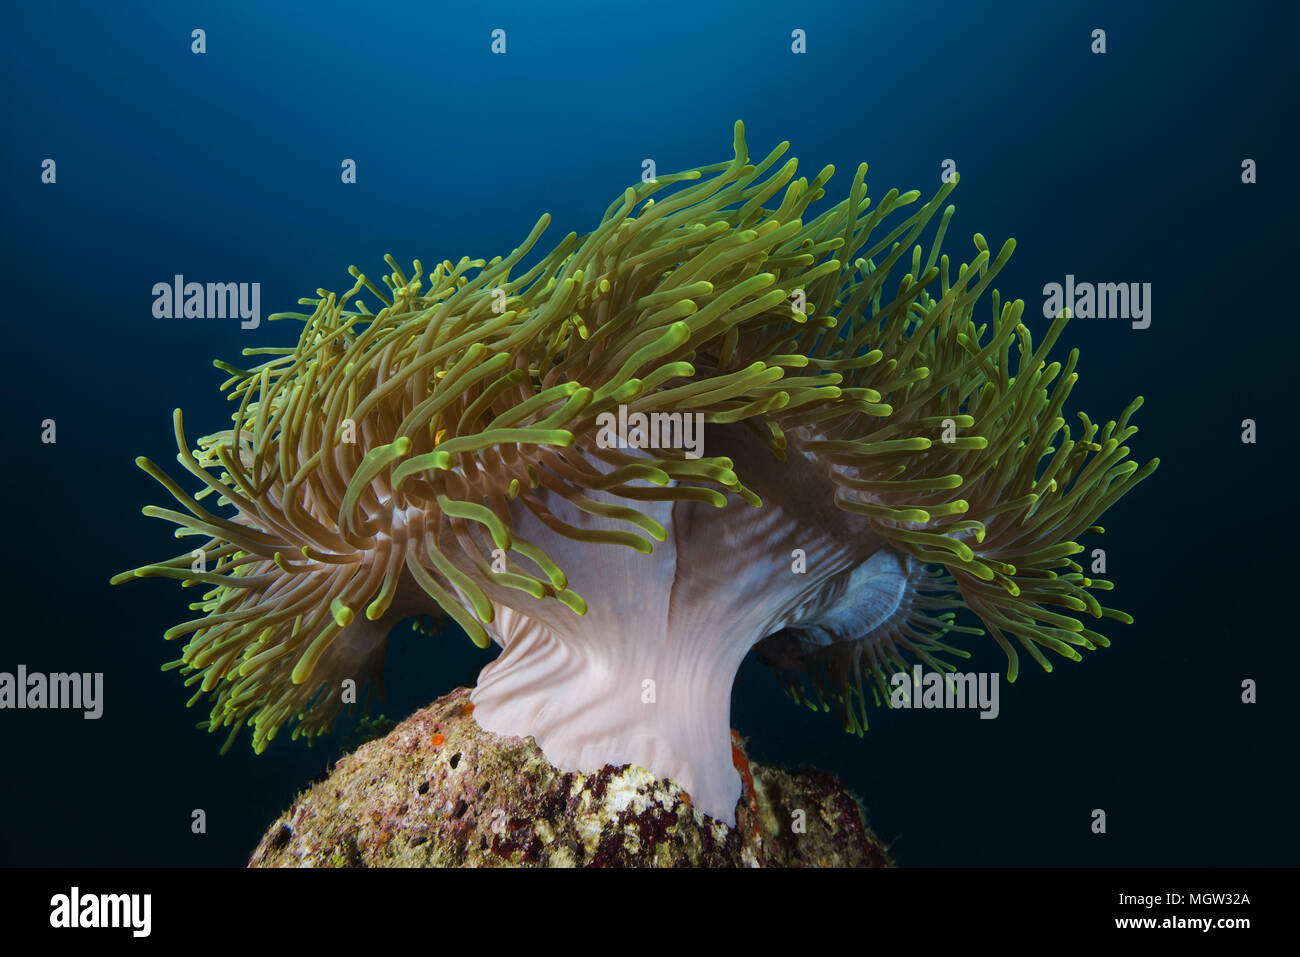 Magnificent Sea Anemone (Heteractis magnifica) Stock Photo